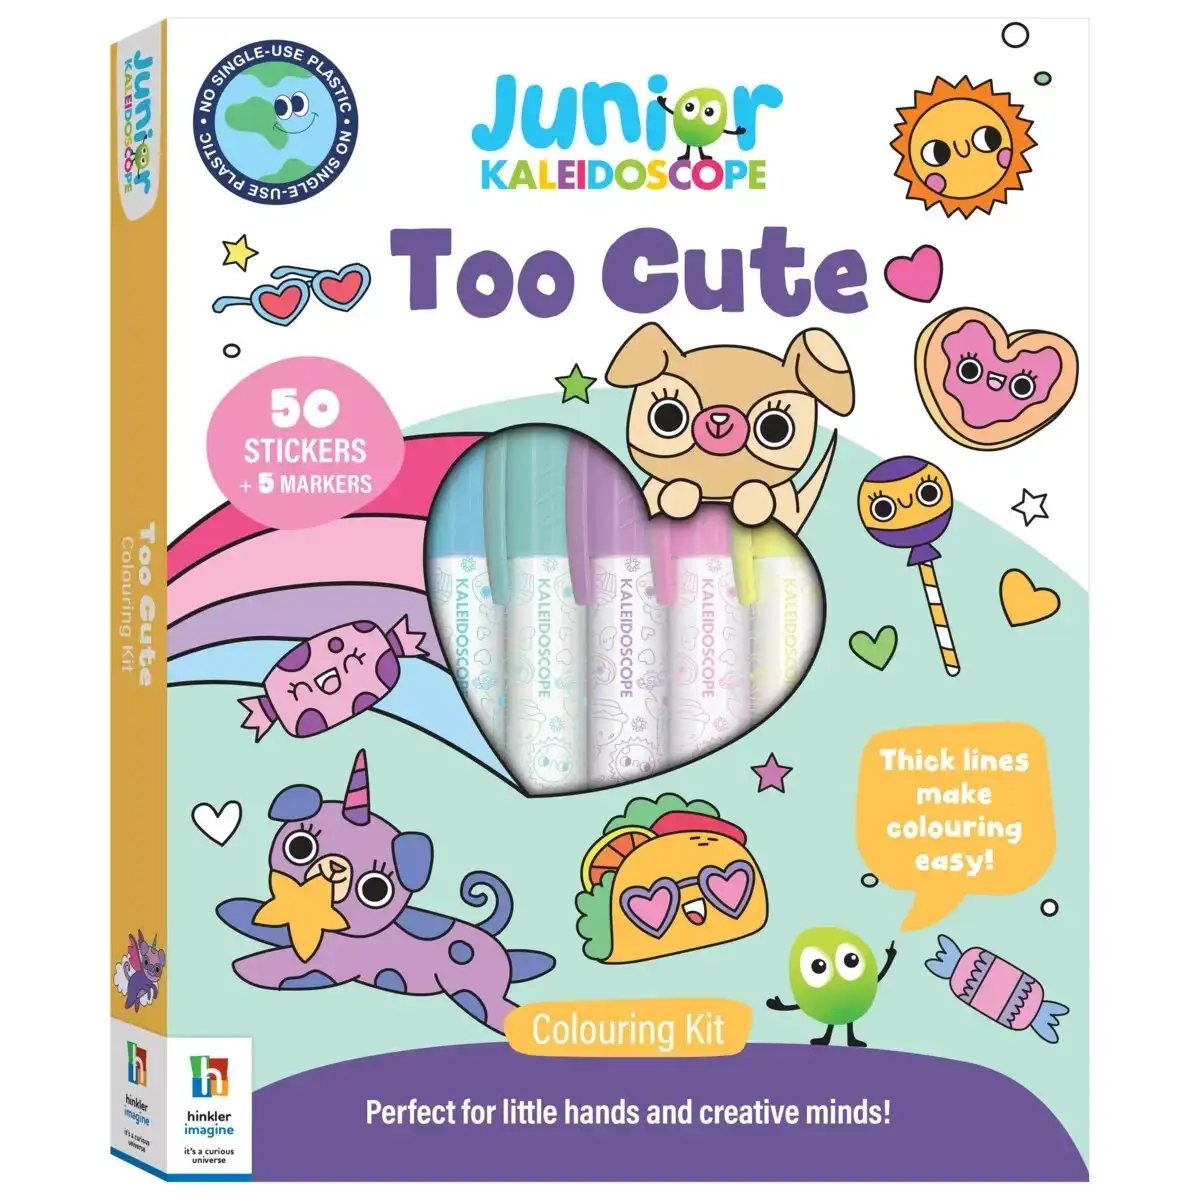 Junior Kaleidoscope Colouring Kit: Too Cute